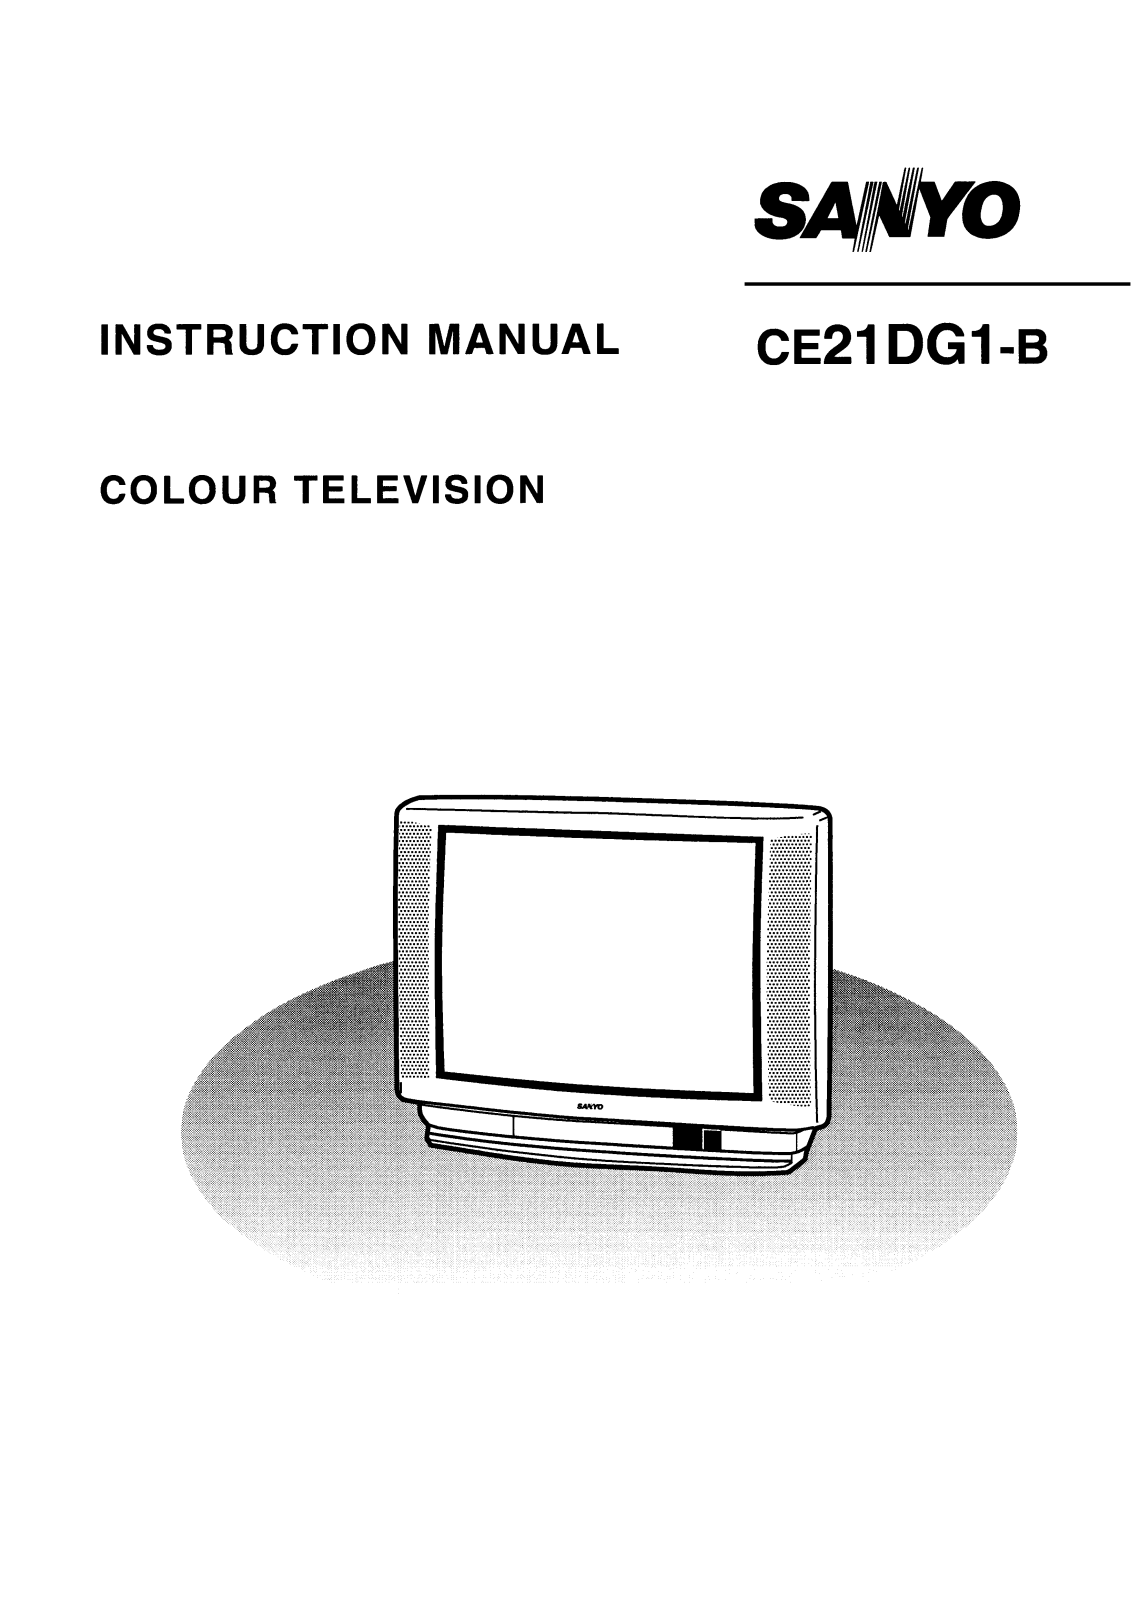 Sanyo CE21DG1-B Instruction Manual